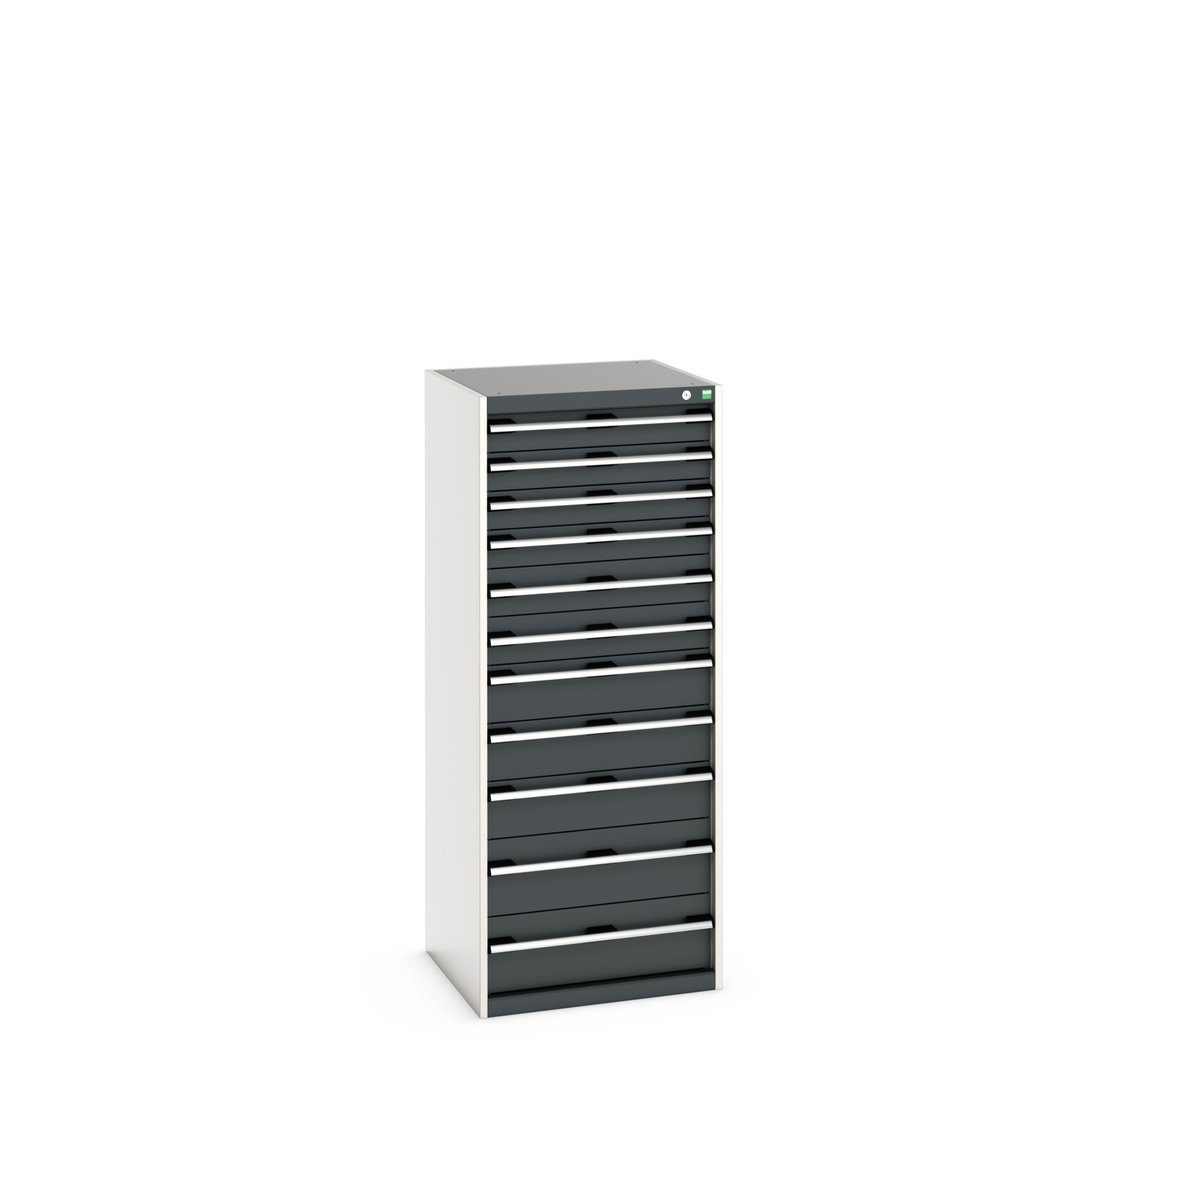 40019156. - cubio drawer cabinet